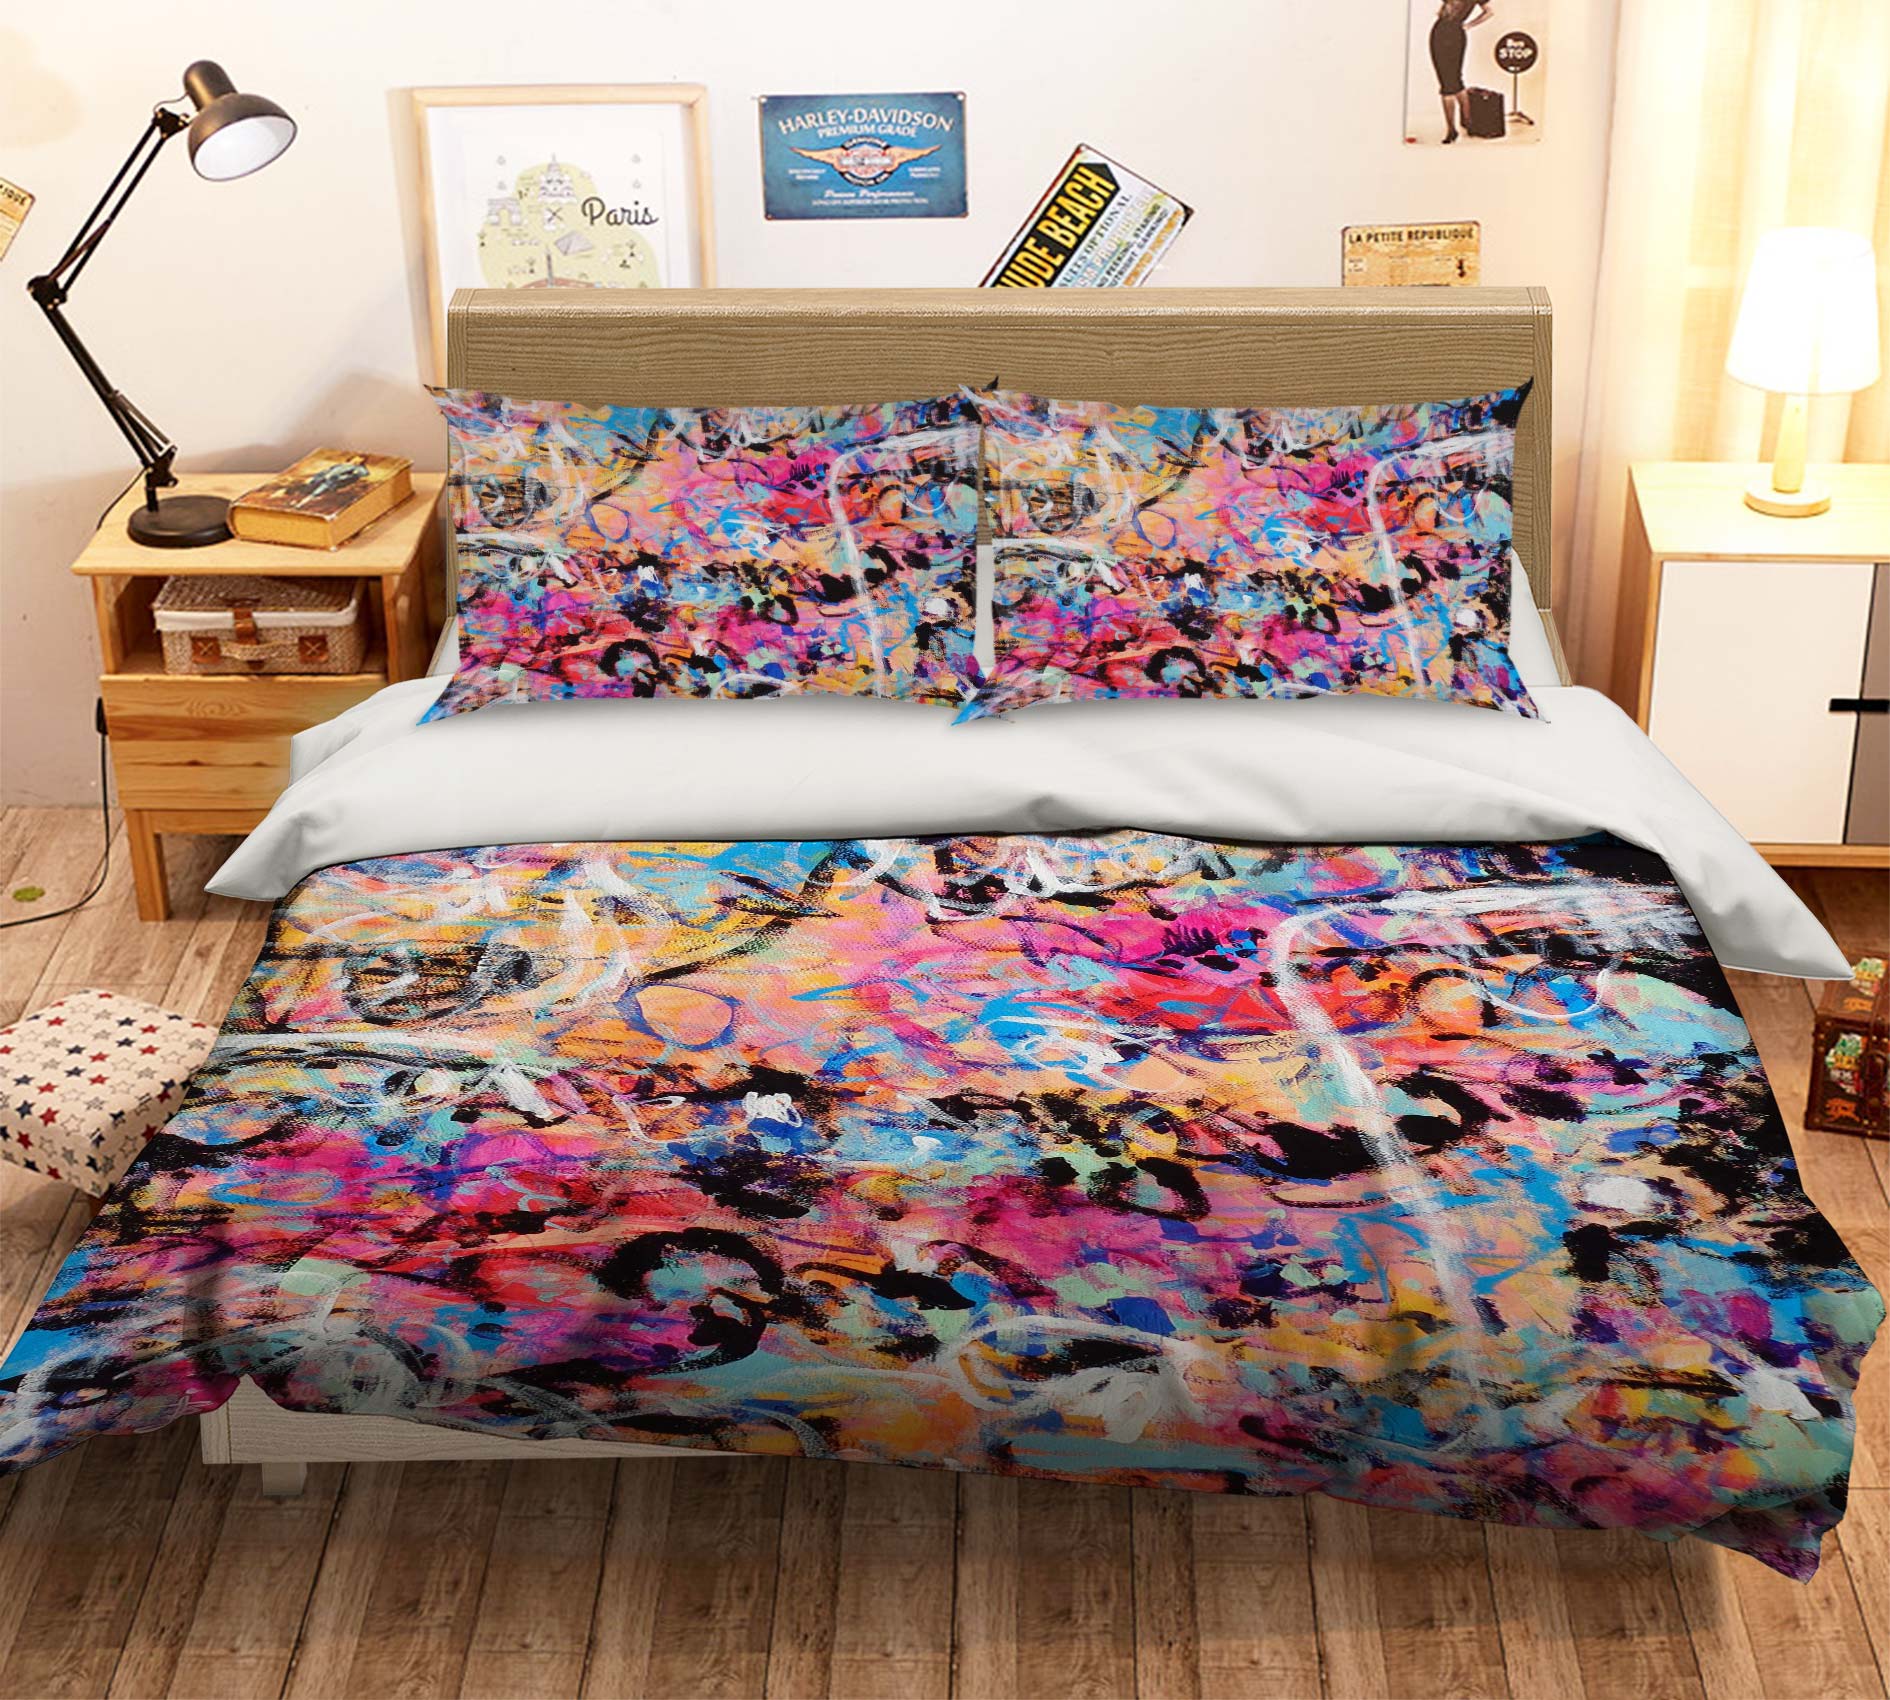 3D Painted Graffiti 1171 Misako Chida Bedding Bed Pillowcases Quilt Cover Duvet Cover